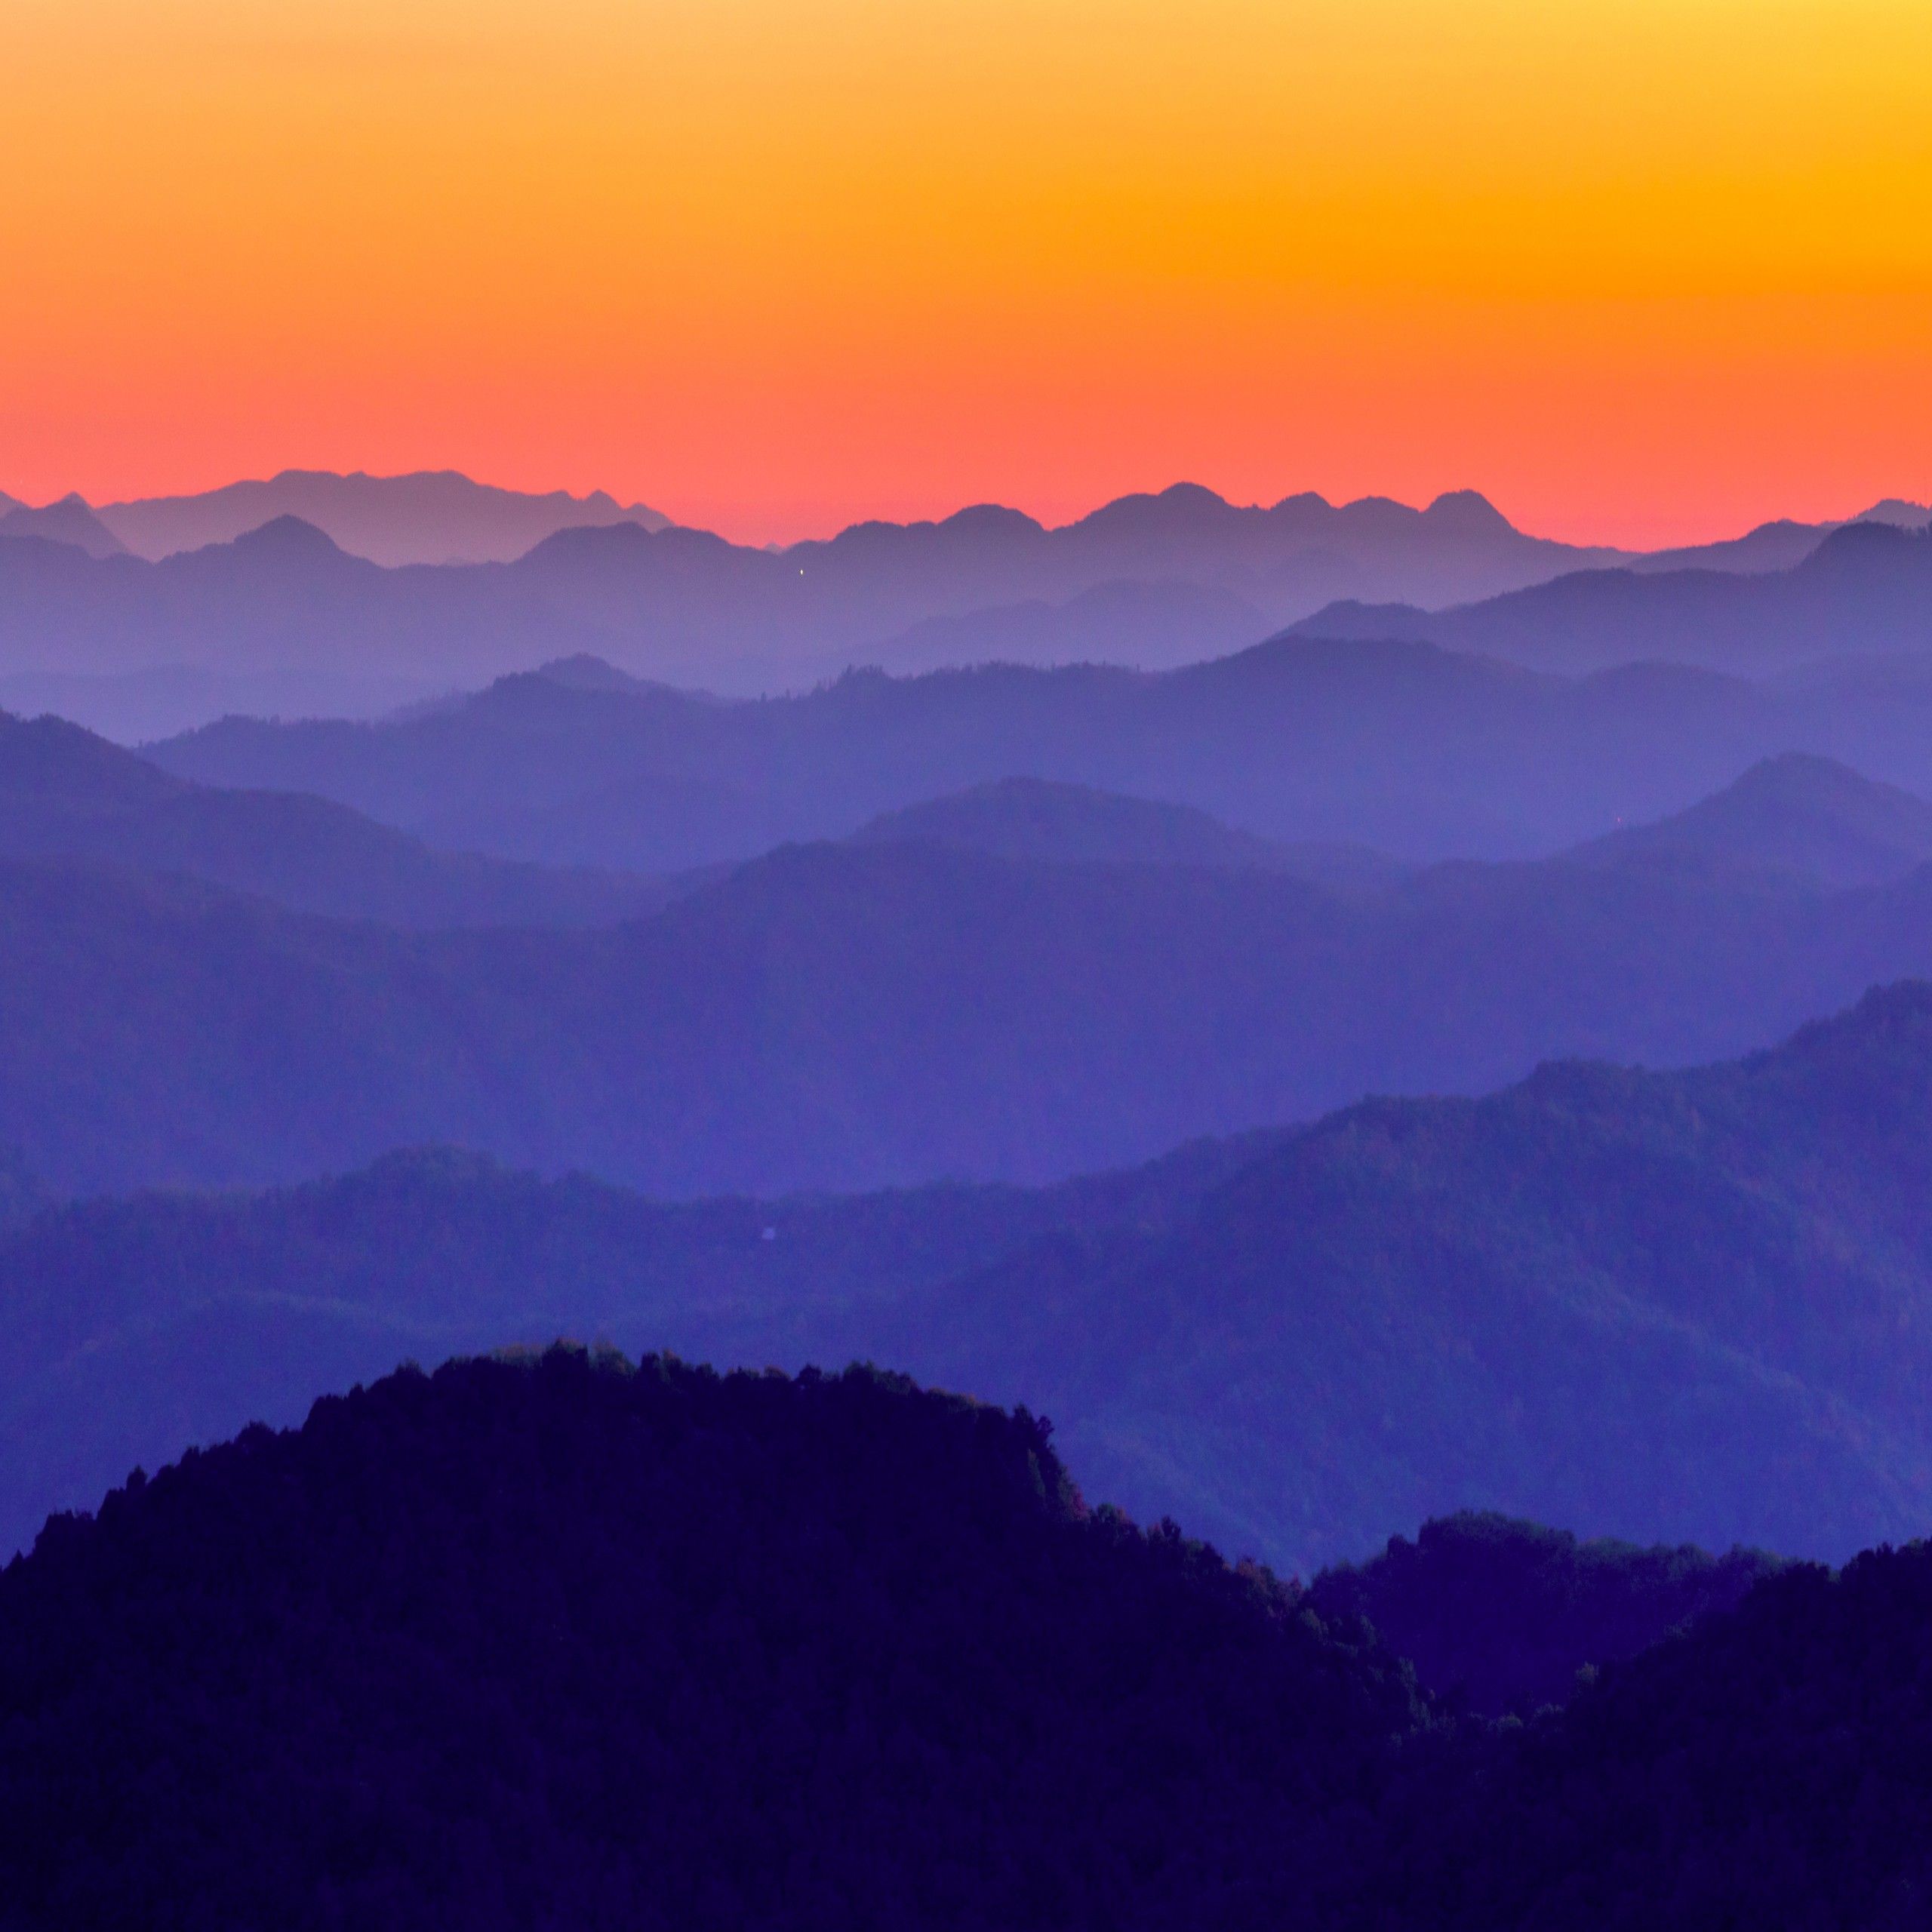 Blue Ridge Mountains 4K Wallpaper, United States of America, Aerial View, Orange Sky, Foggy, Landscape, Nature